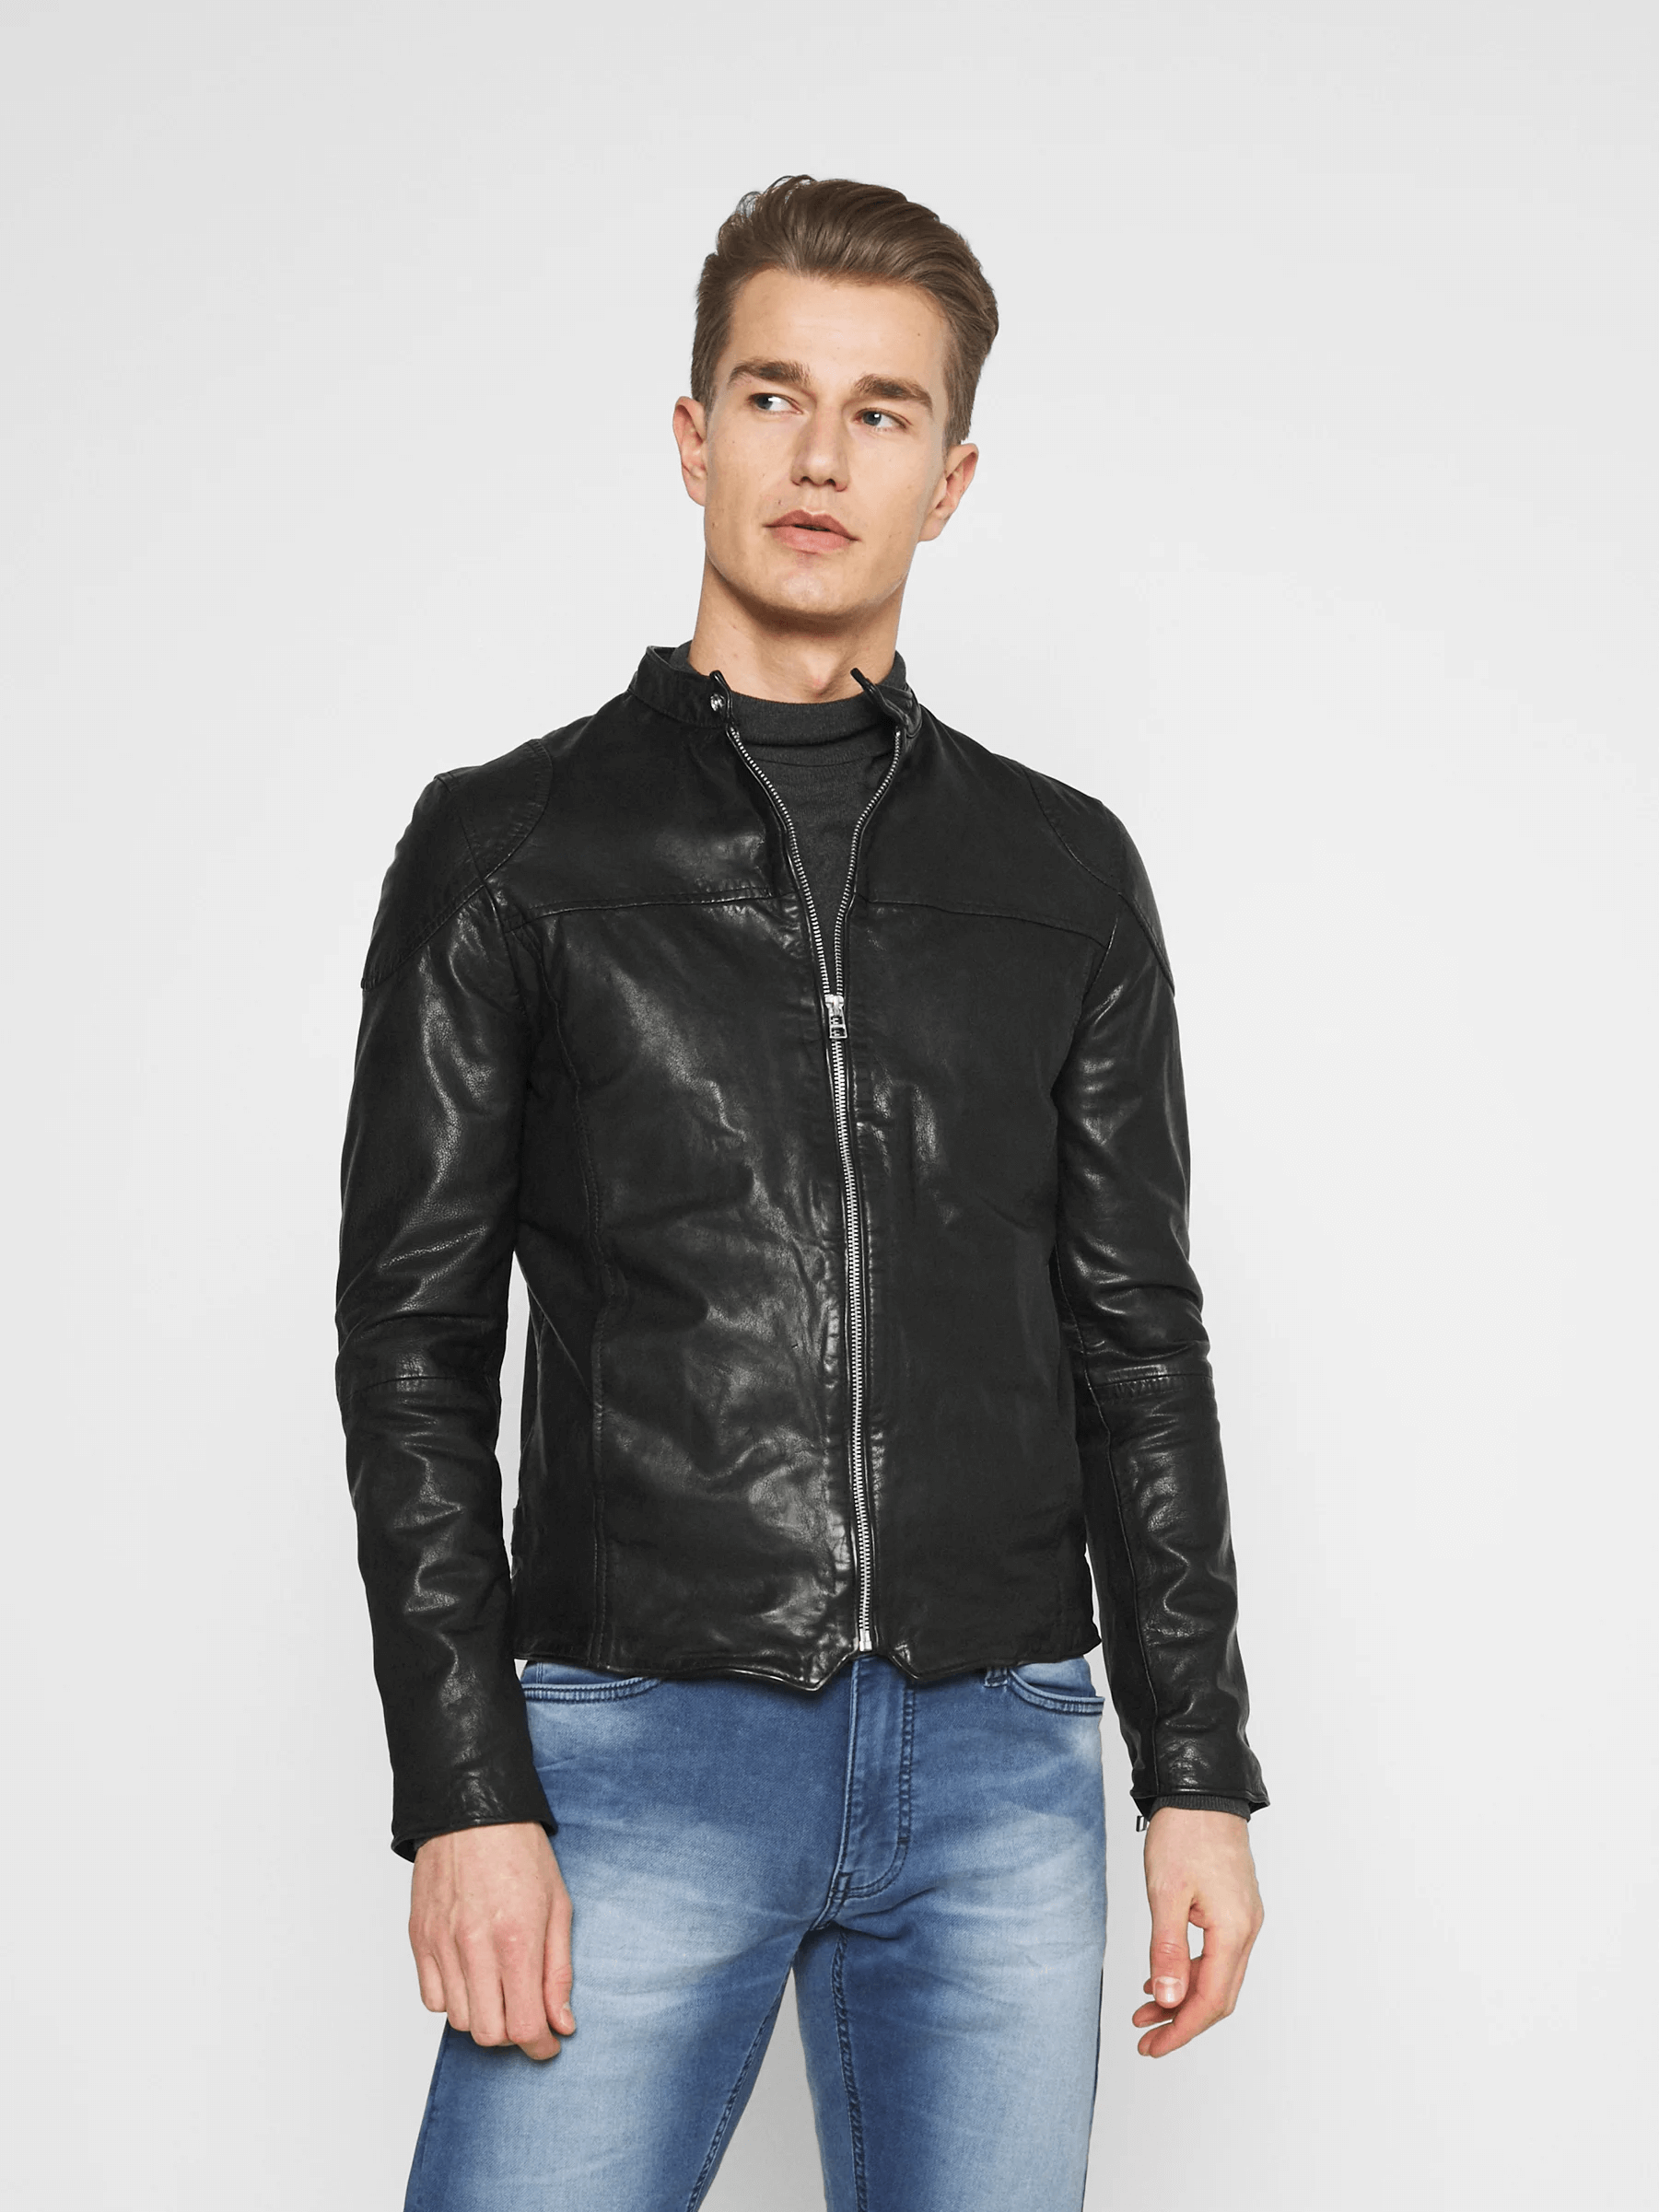 Arnie Black Leather Jacket – Sculpt Leather Jackets